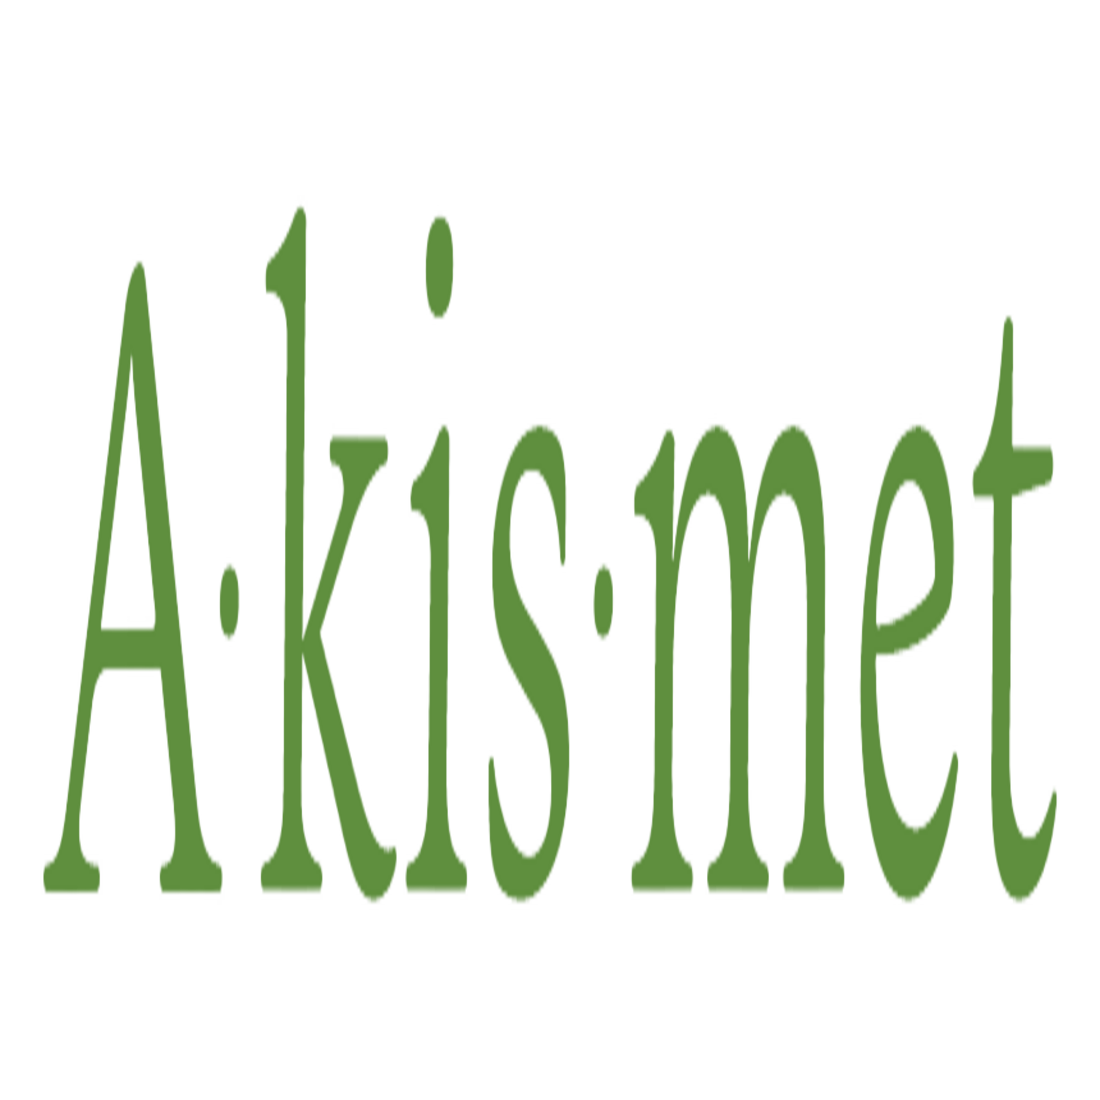 Akismet Wordpress spam protection logo